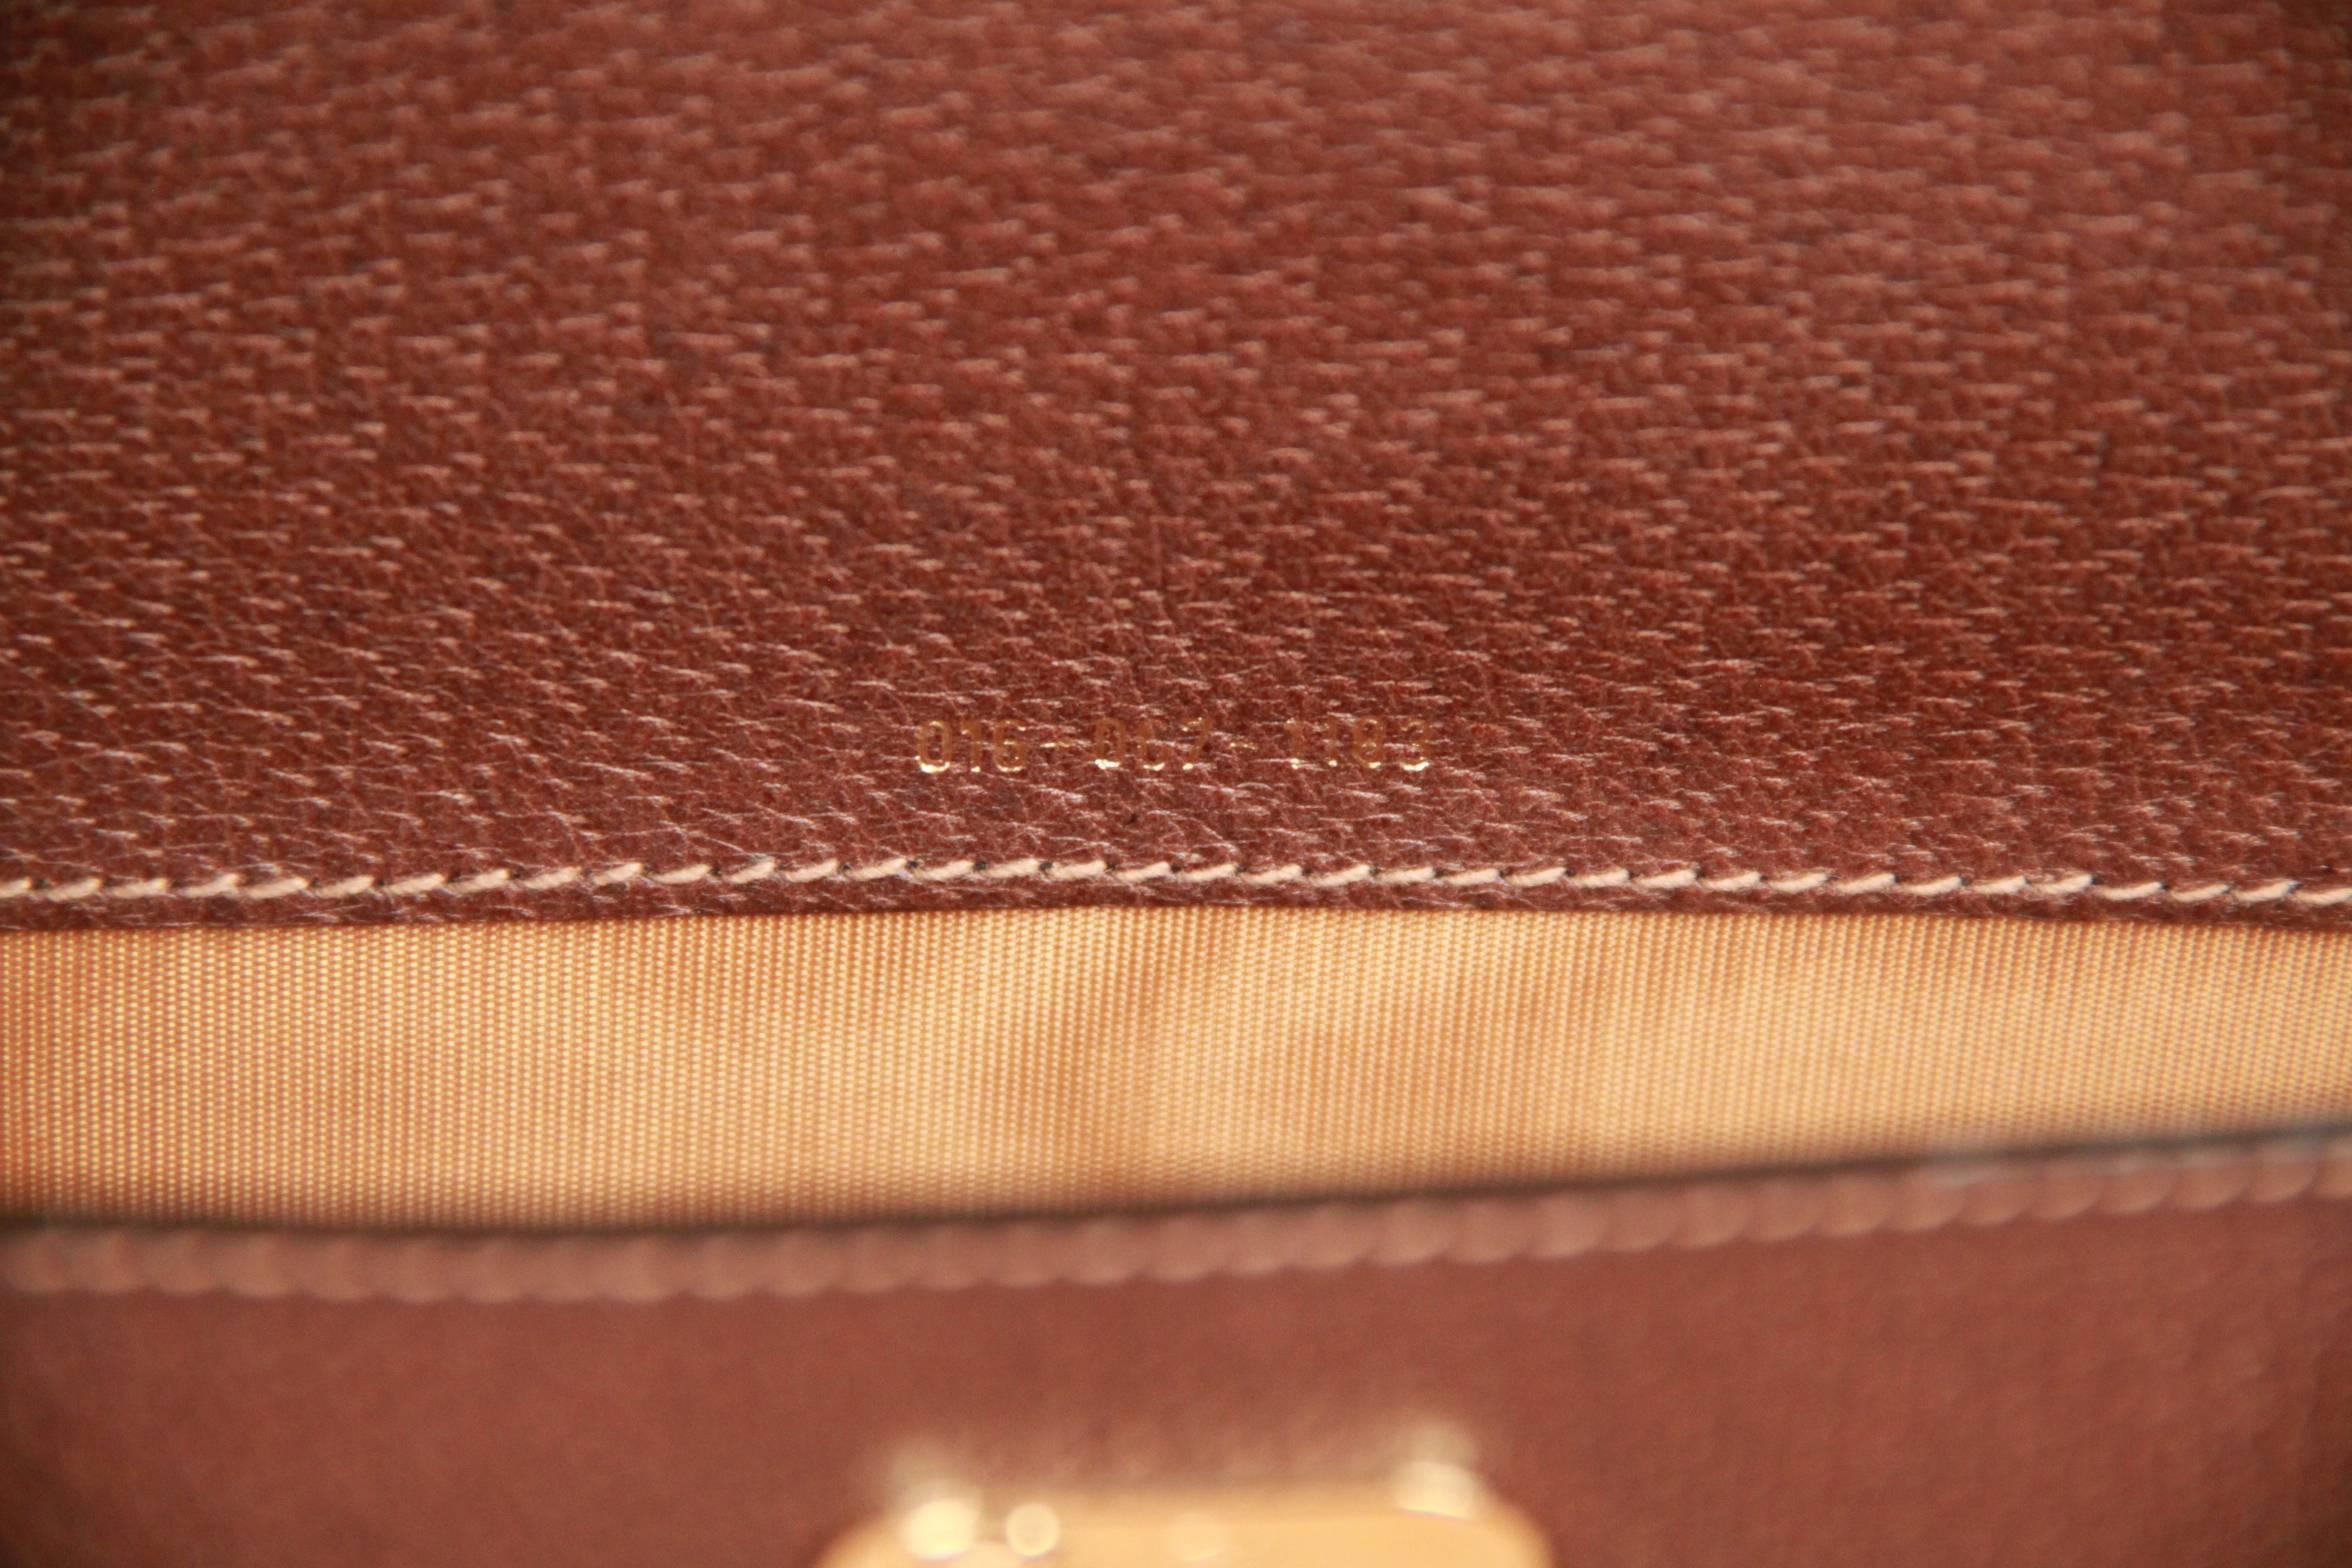 Women's GUCCI VINTAGE Tan Leather HARD SIDE BRIEFCASE Work Bag w/ Stripes